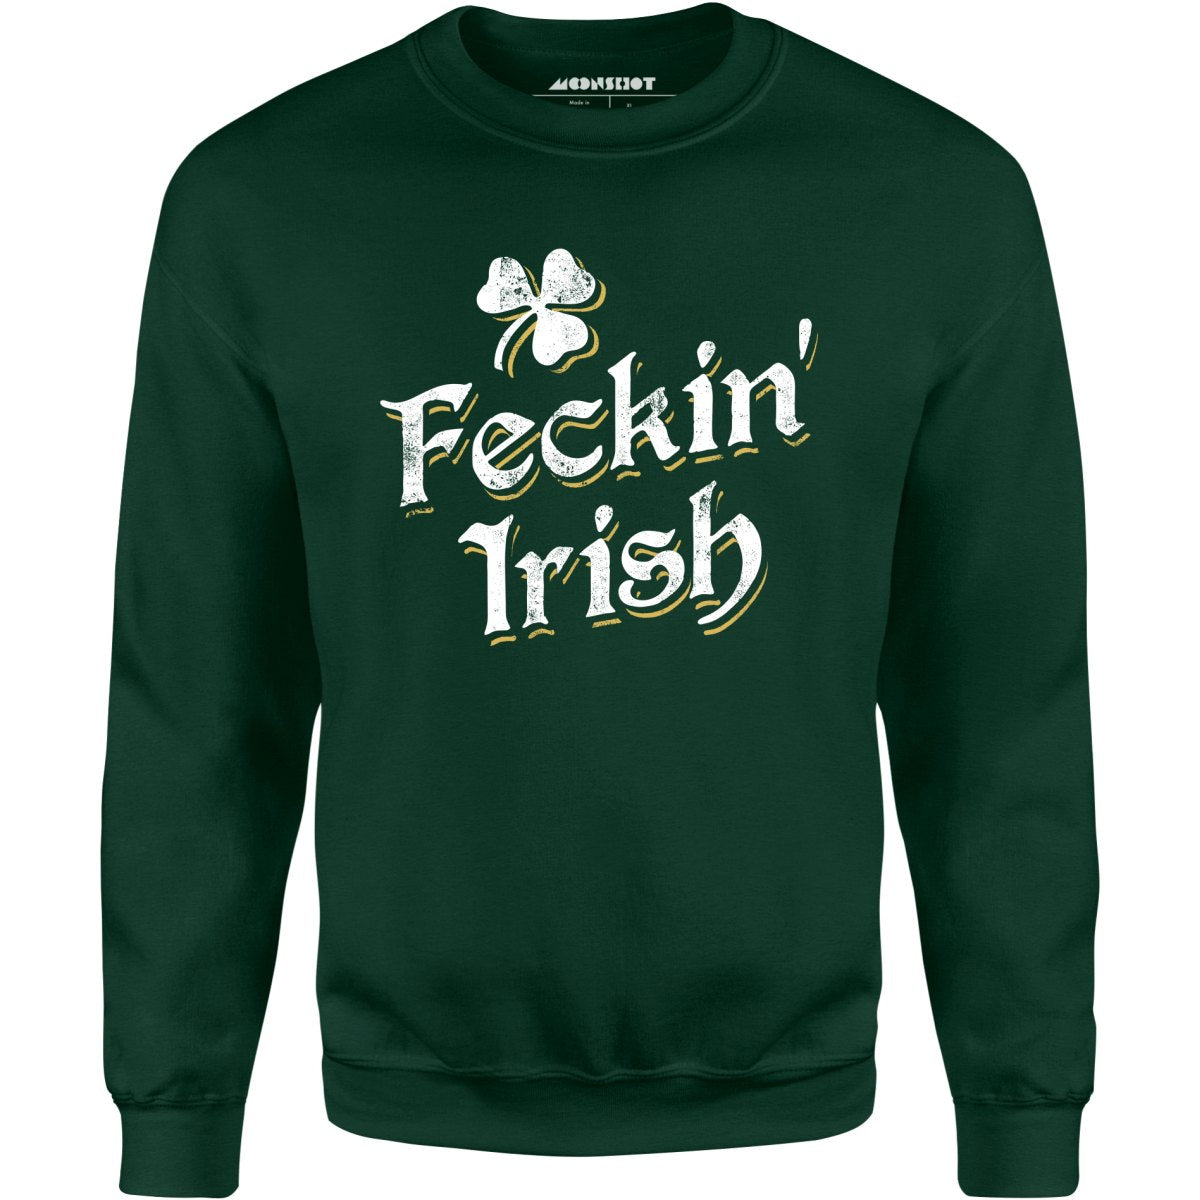 Feckin' Irish - Unisex Sweatshirt